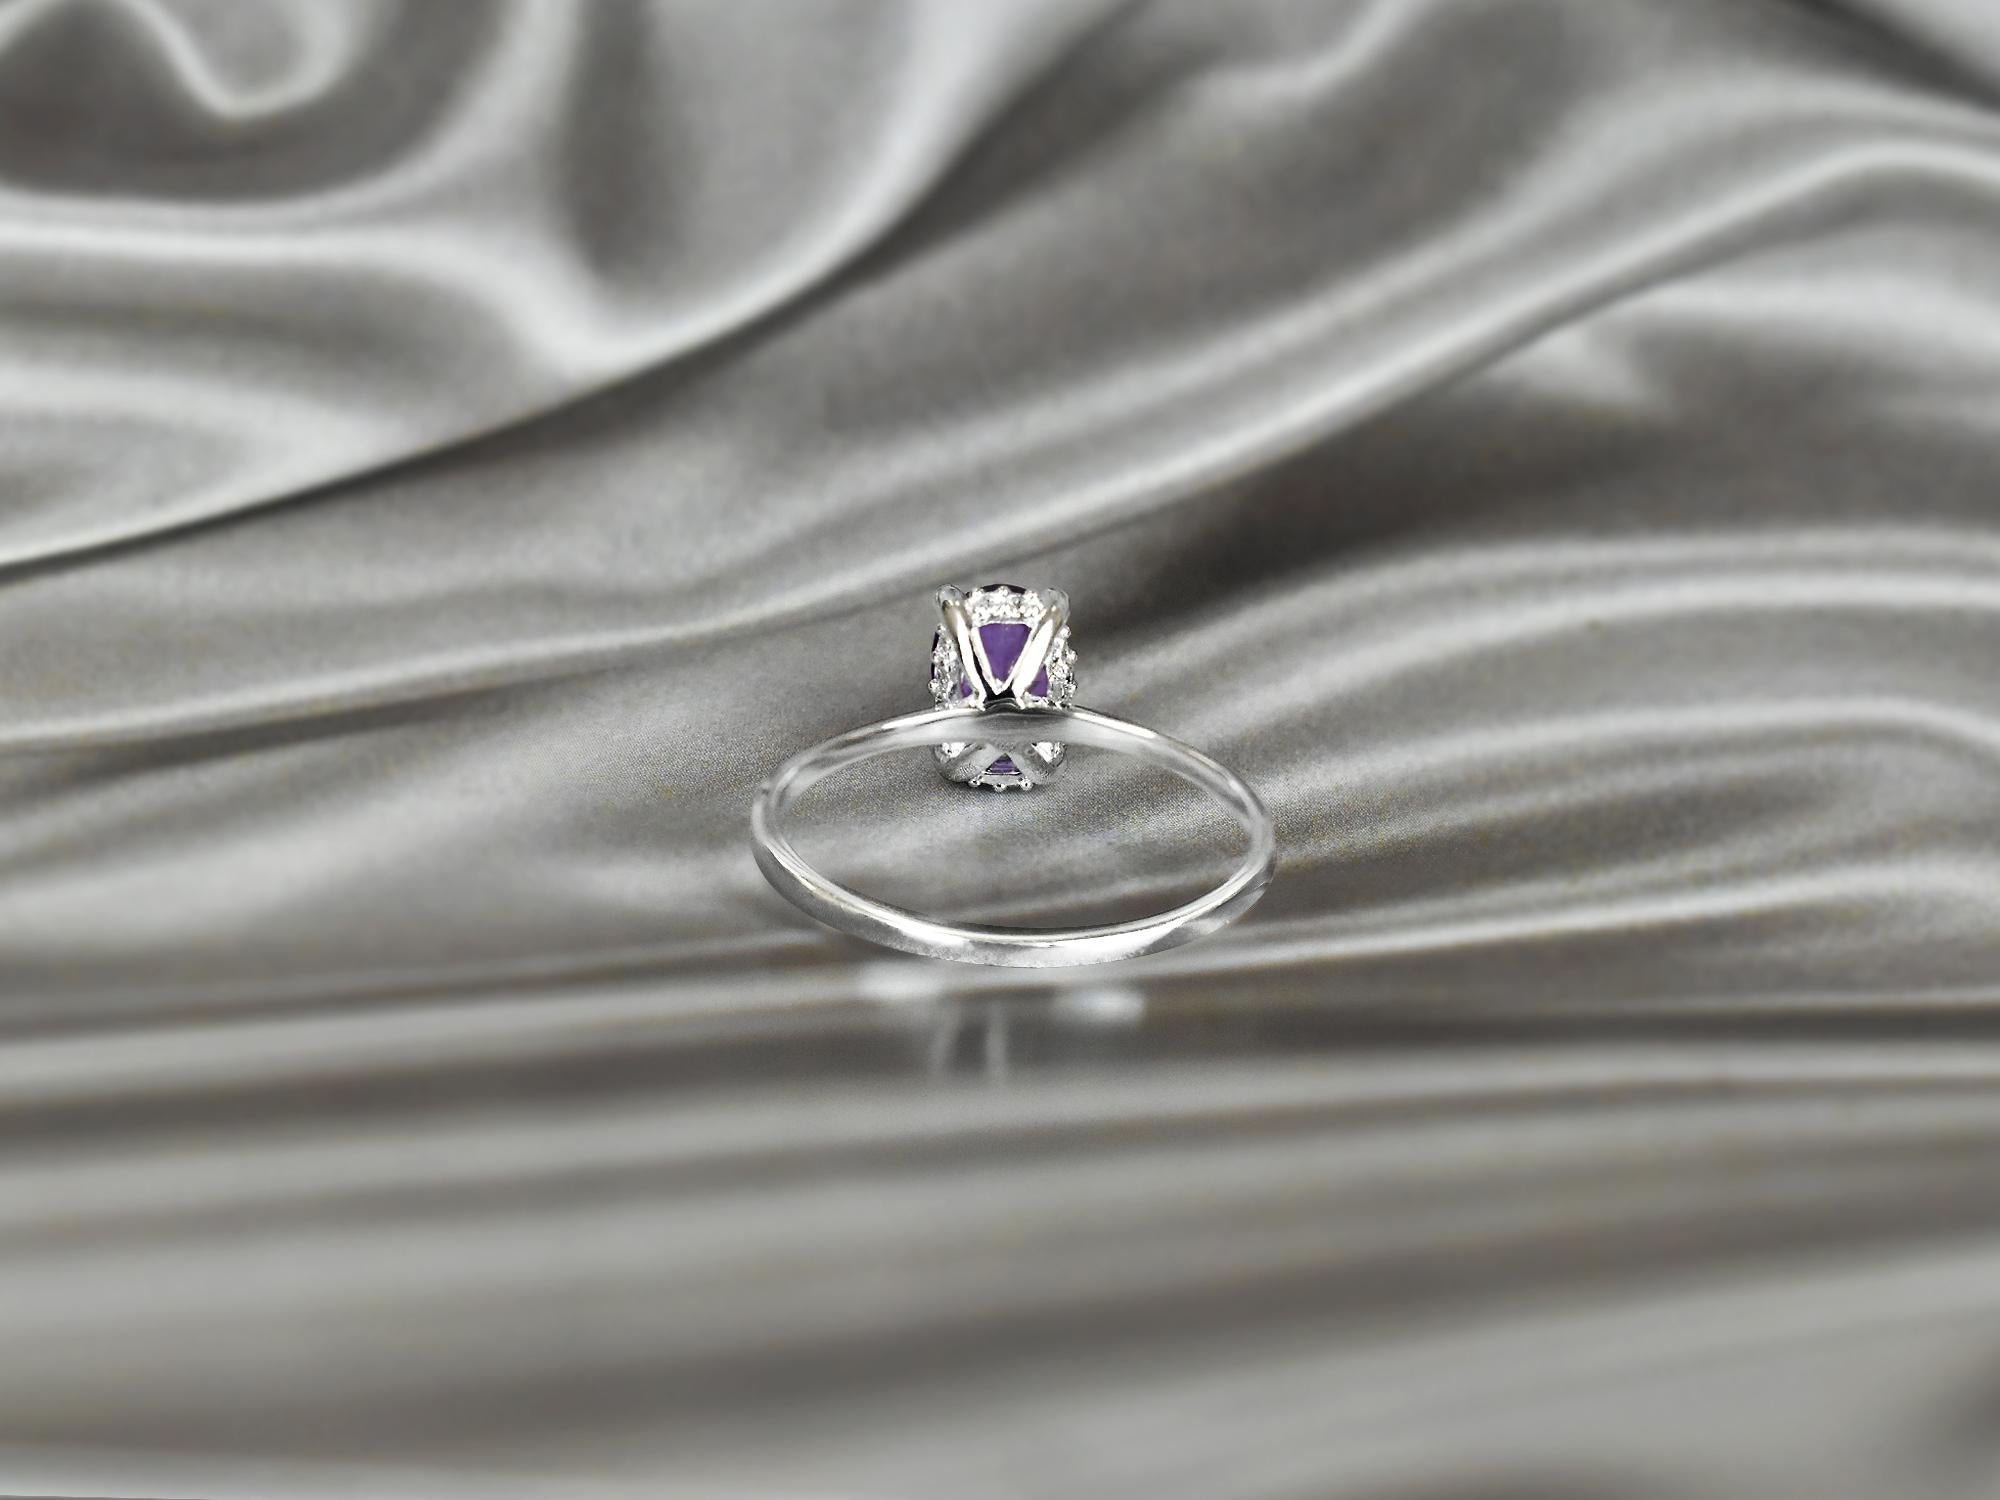 For Sale:  10k Gold Oval Gemstone 8x6 mm Oval Cut Gemstone Ring Gemstone Engagement Ring 11